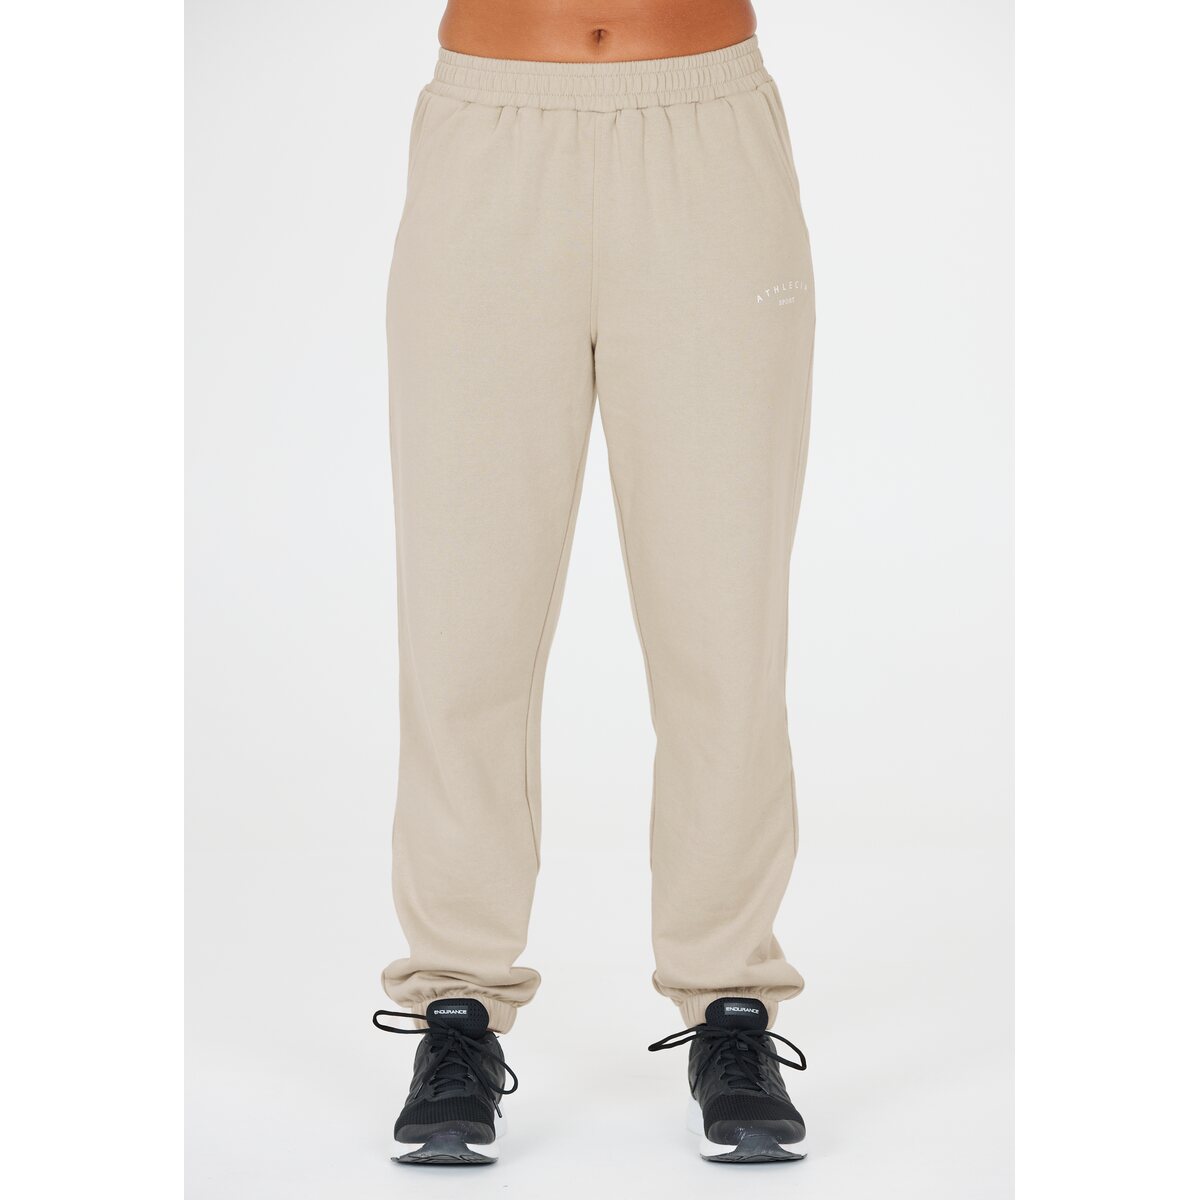 Athlecia Asport Womenswear Pants 2 Shaws Department Stores